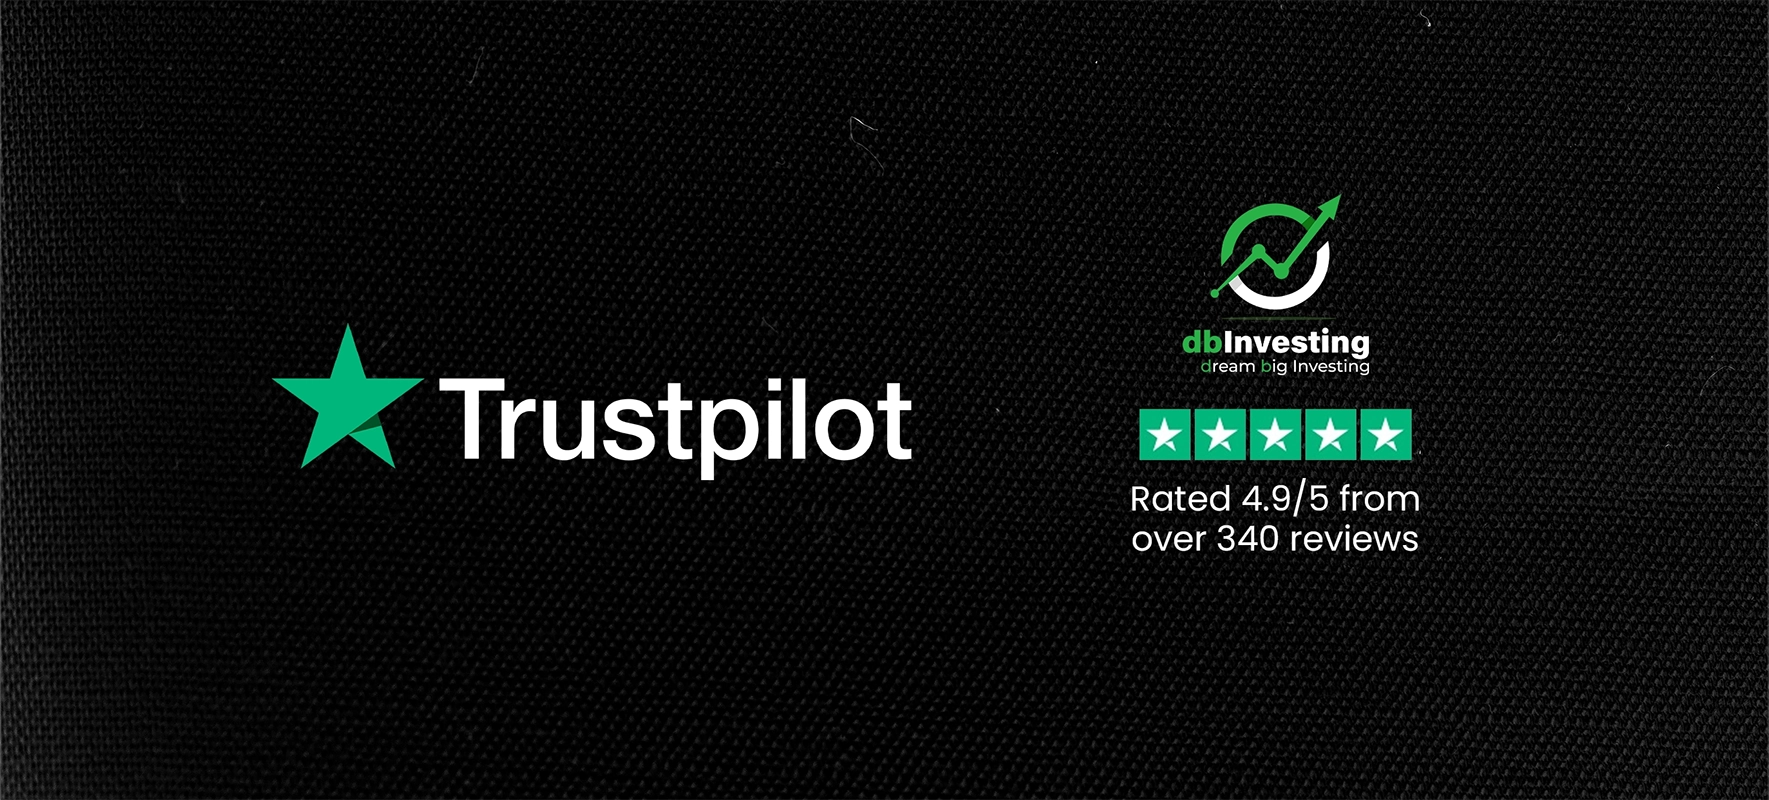 DBInvesting Review Trustpilot